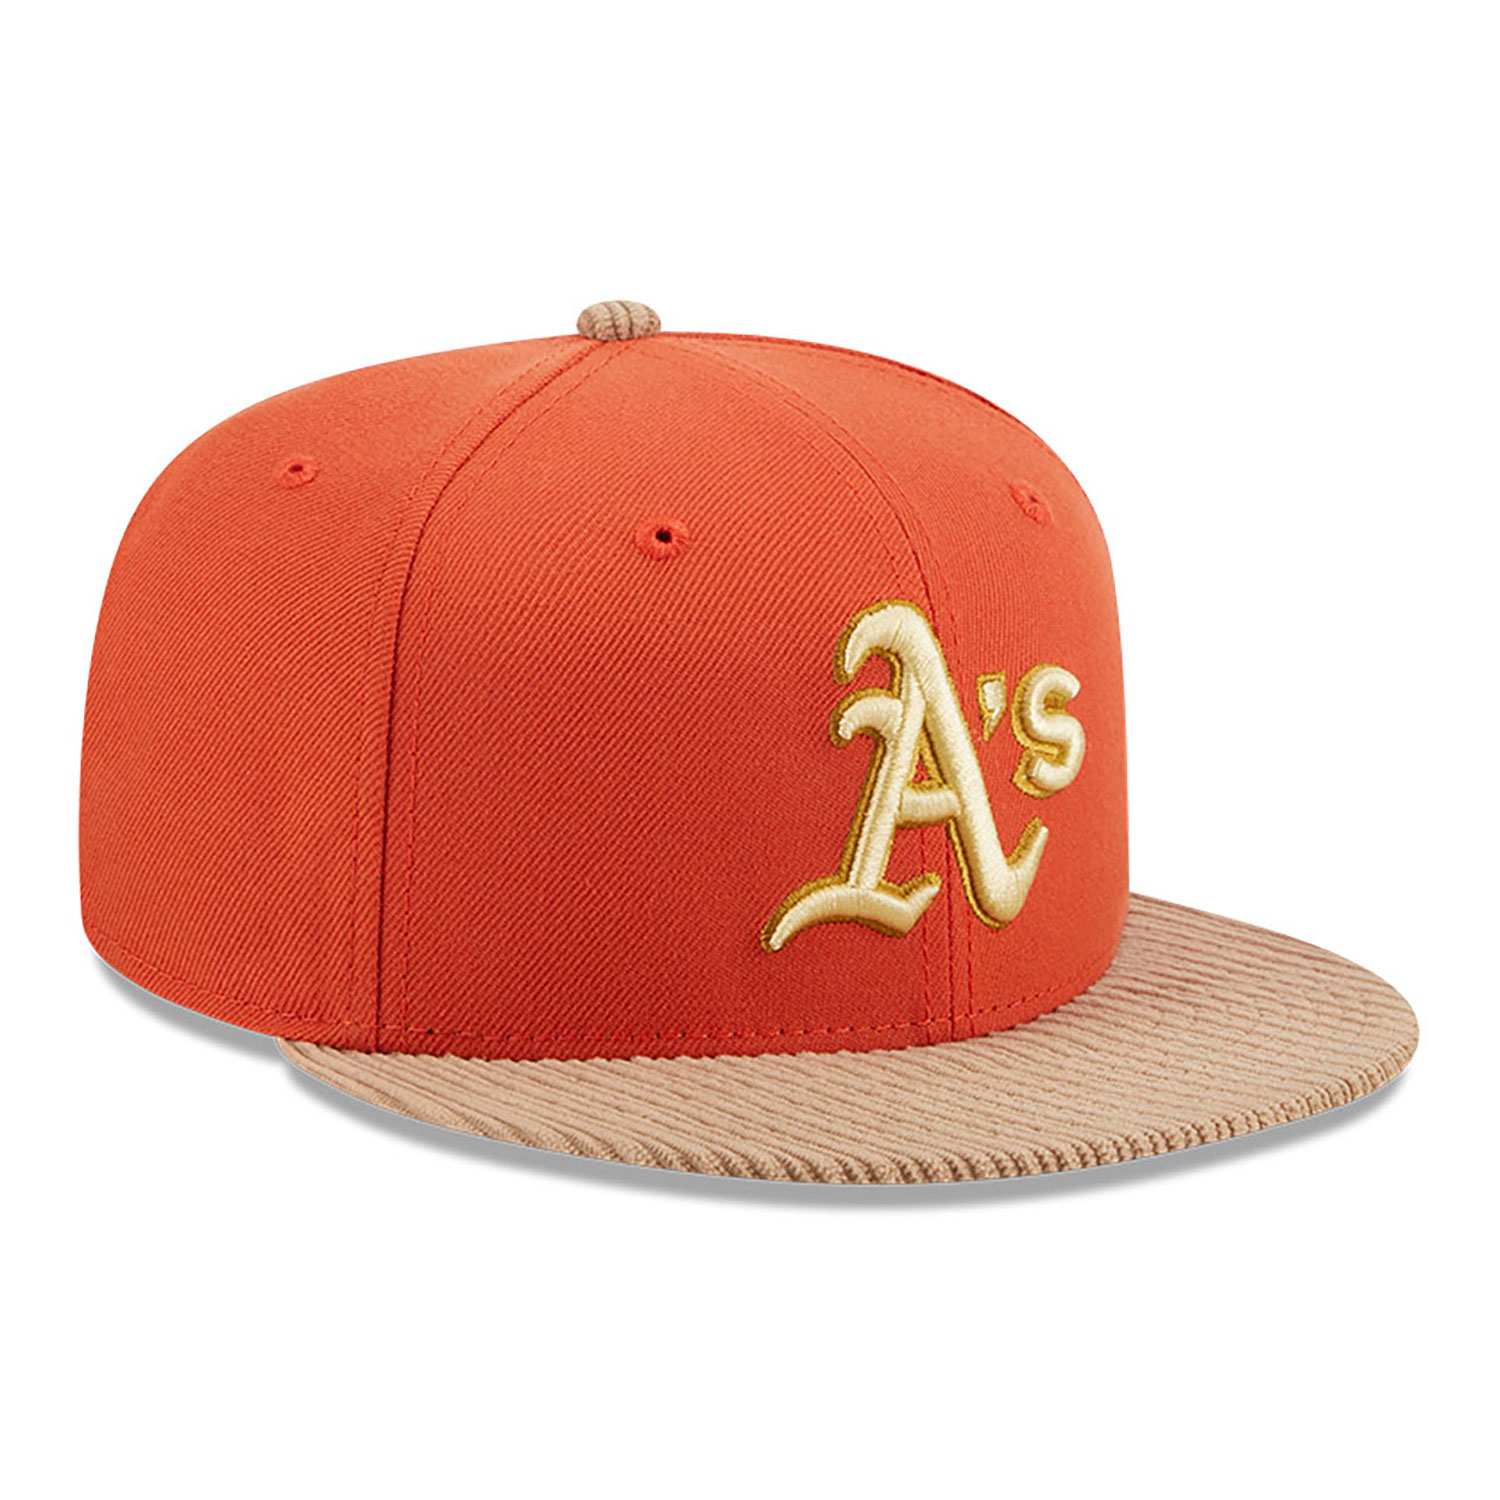 Oakland Athletics MLB Autumn Wheat Dark Orange 9FIFTY Snapback Cap